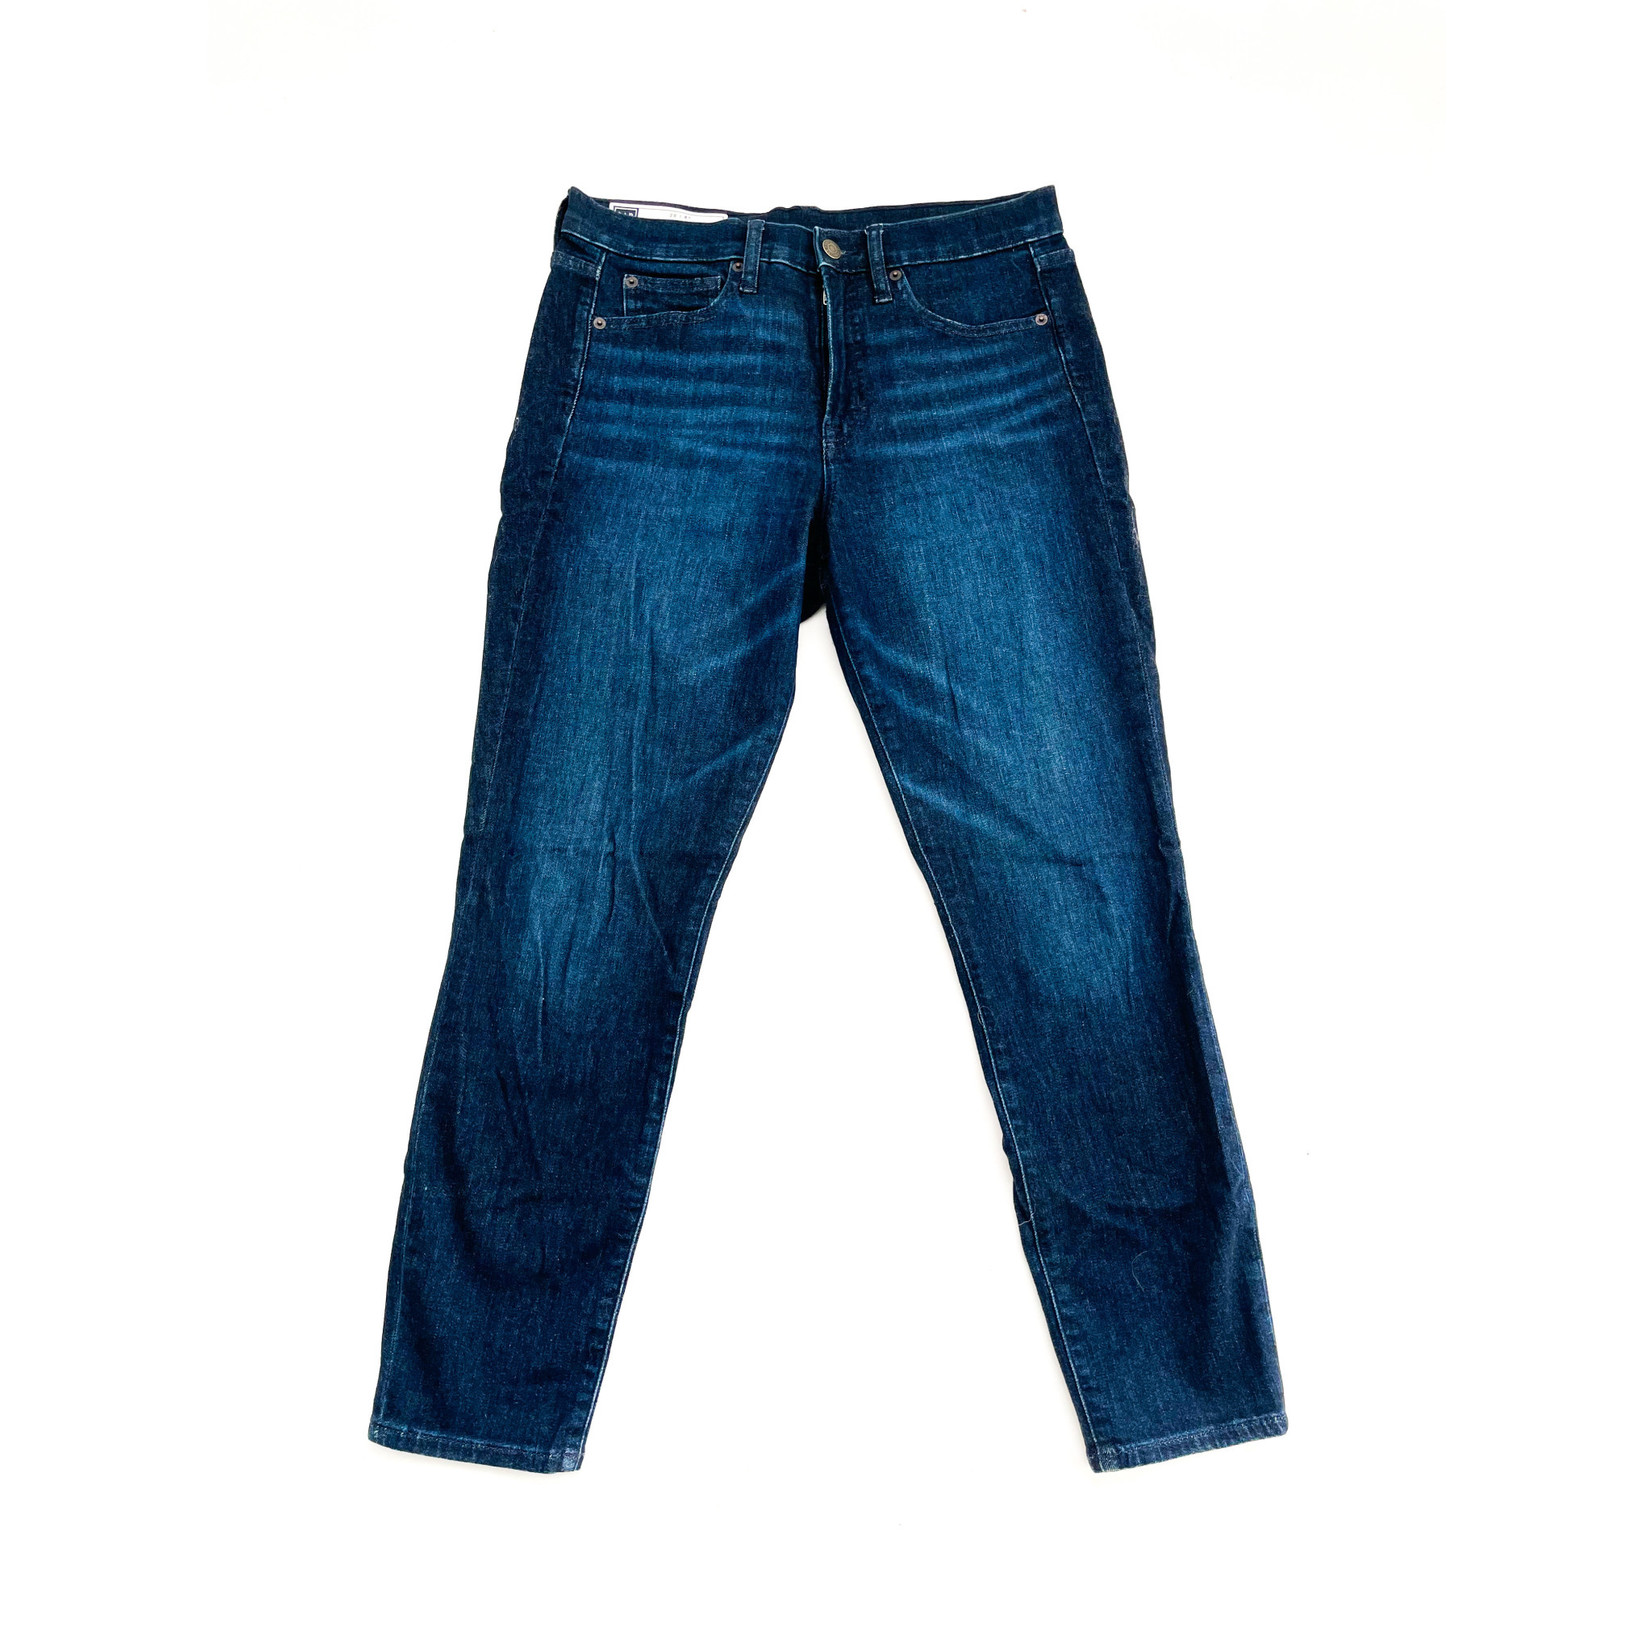 Gap Gap True Skinny High Rise Jeans - Size 29